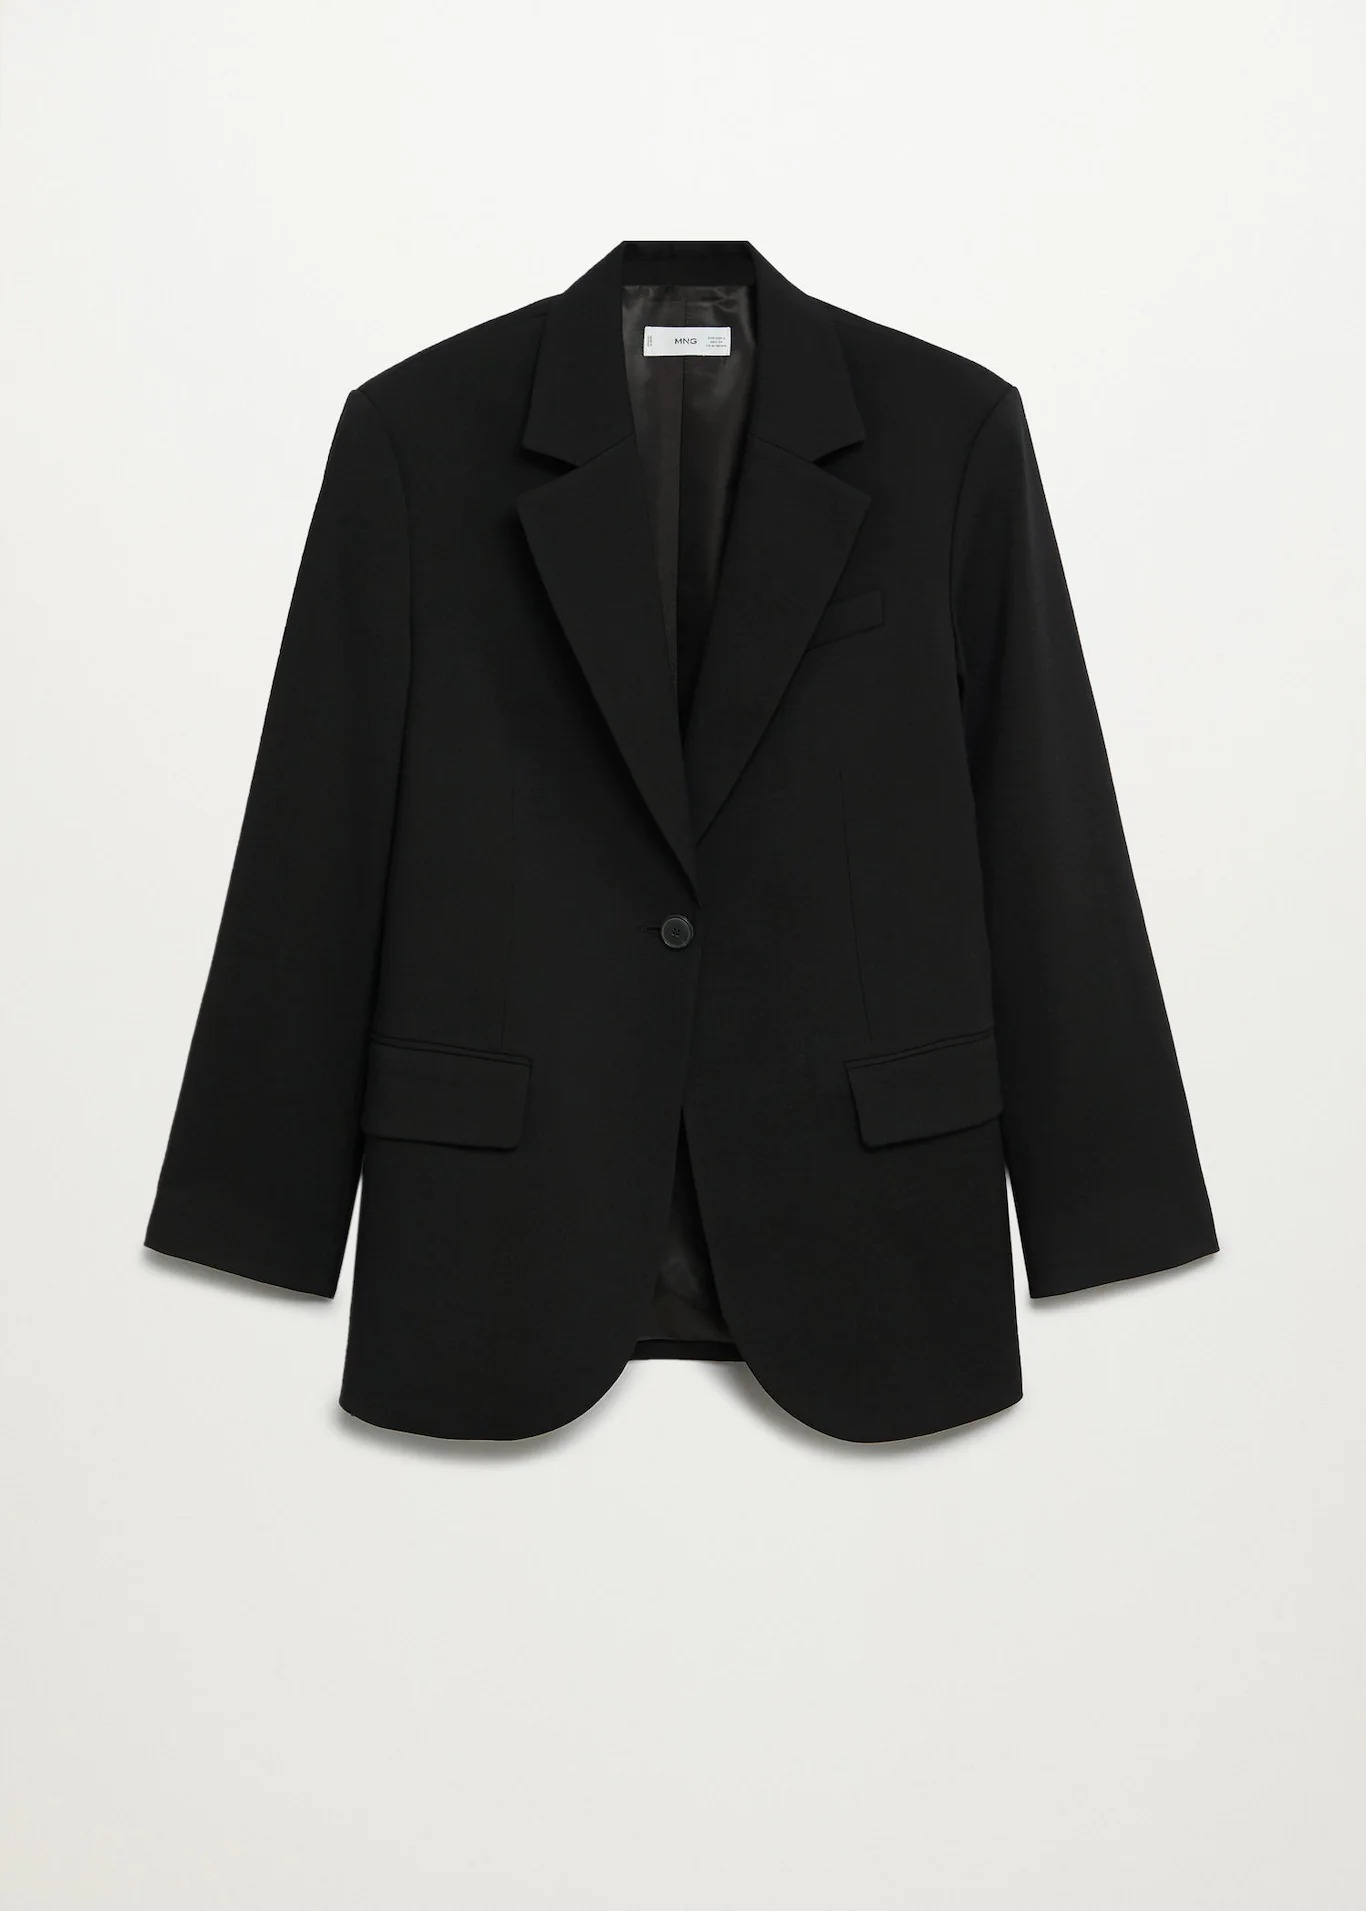 Mango 77097883 Structured suit blazer size XS5